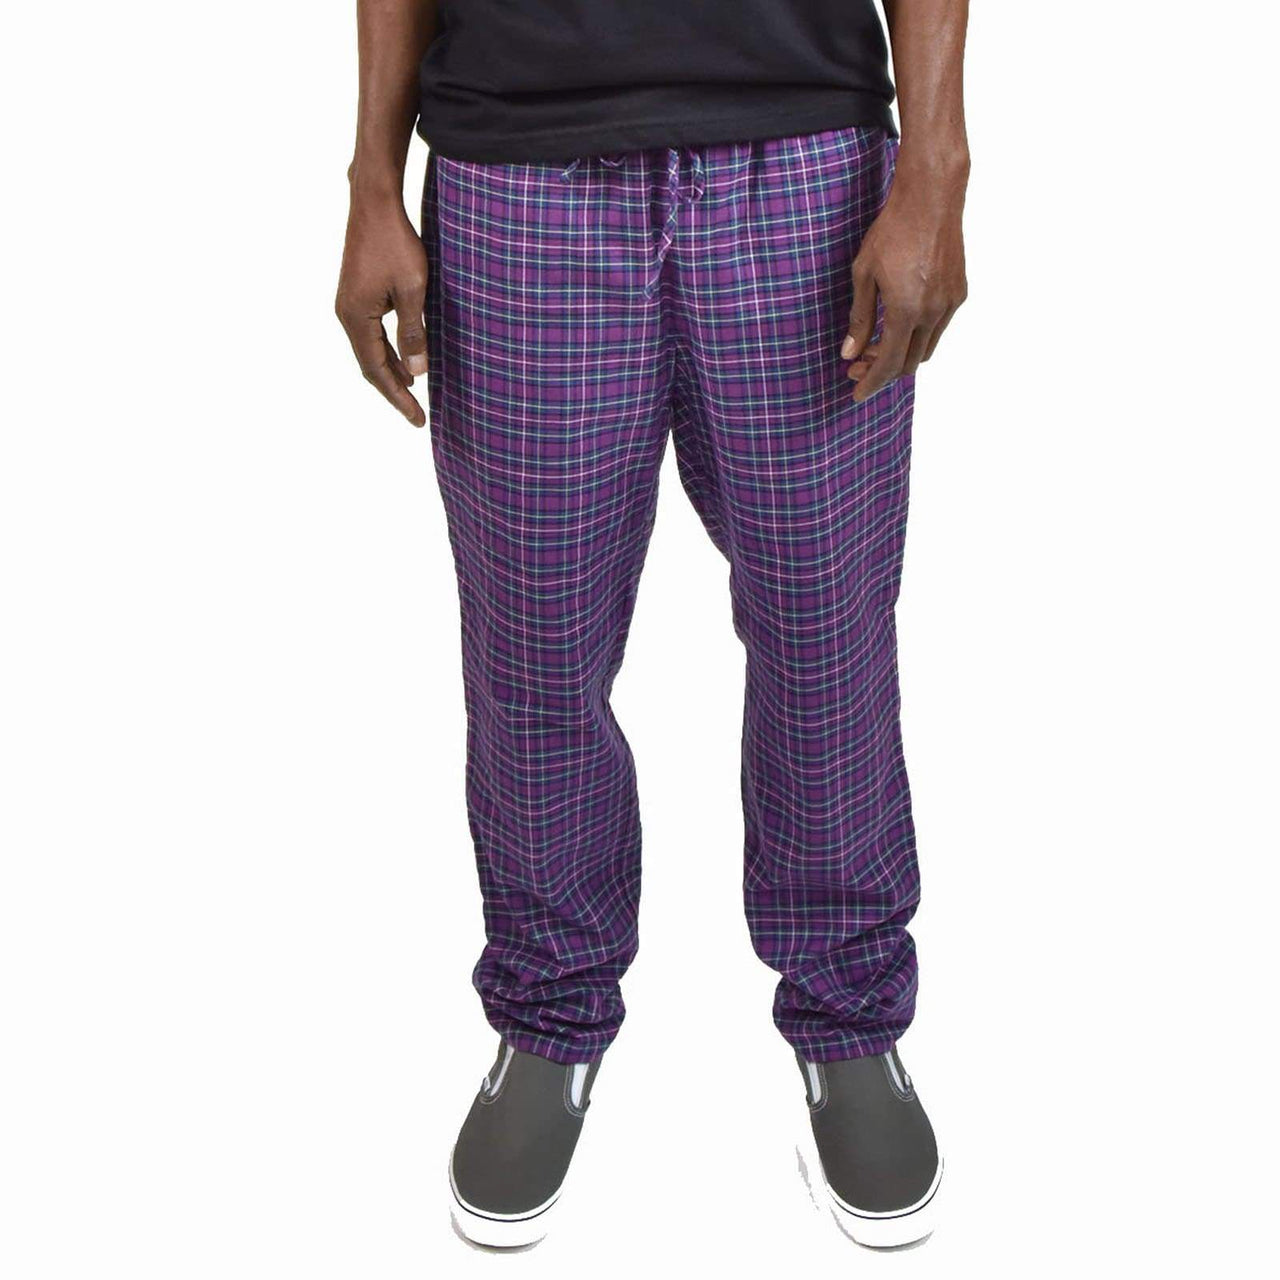 SKIDZ NYC Pants Purple Plaid Lined Pant